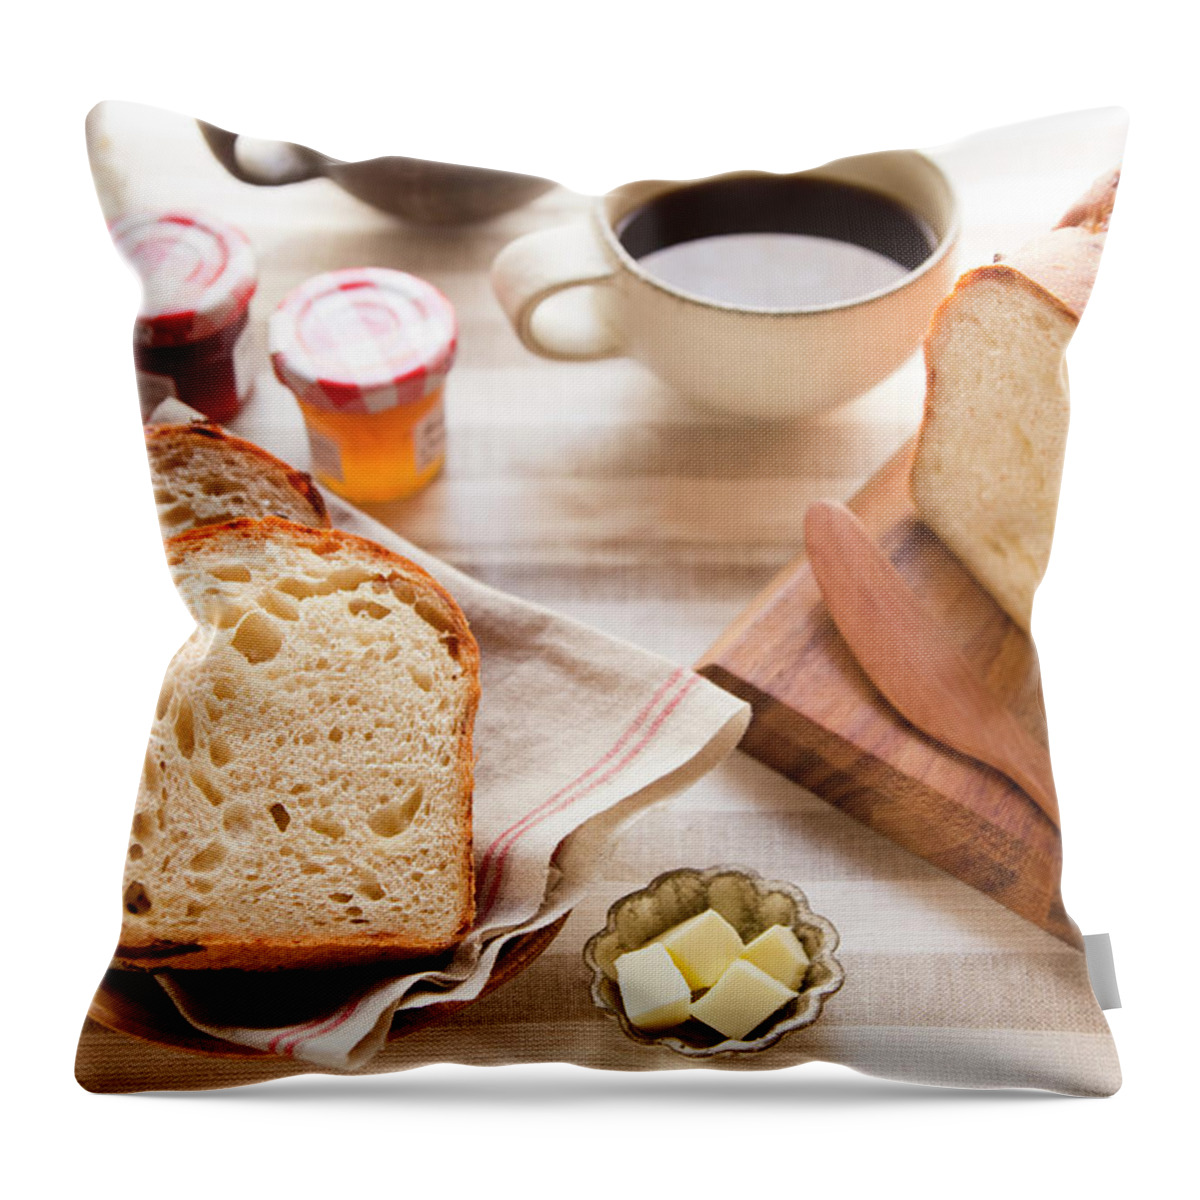 Breakfast Throw Pillow featuring the photograph Breakfast by Masahiro Makino